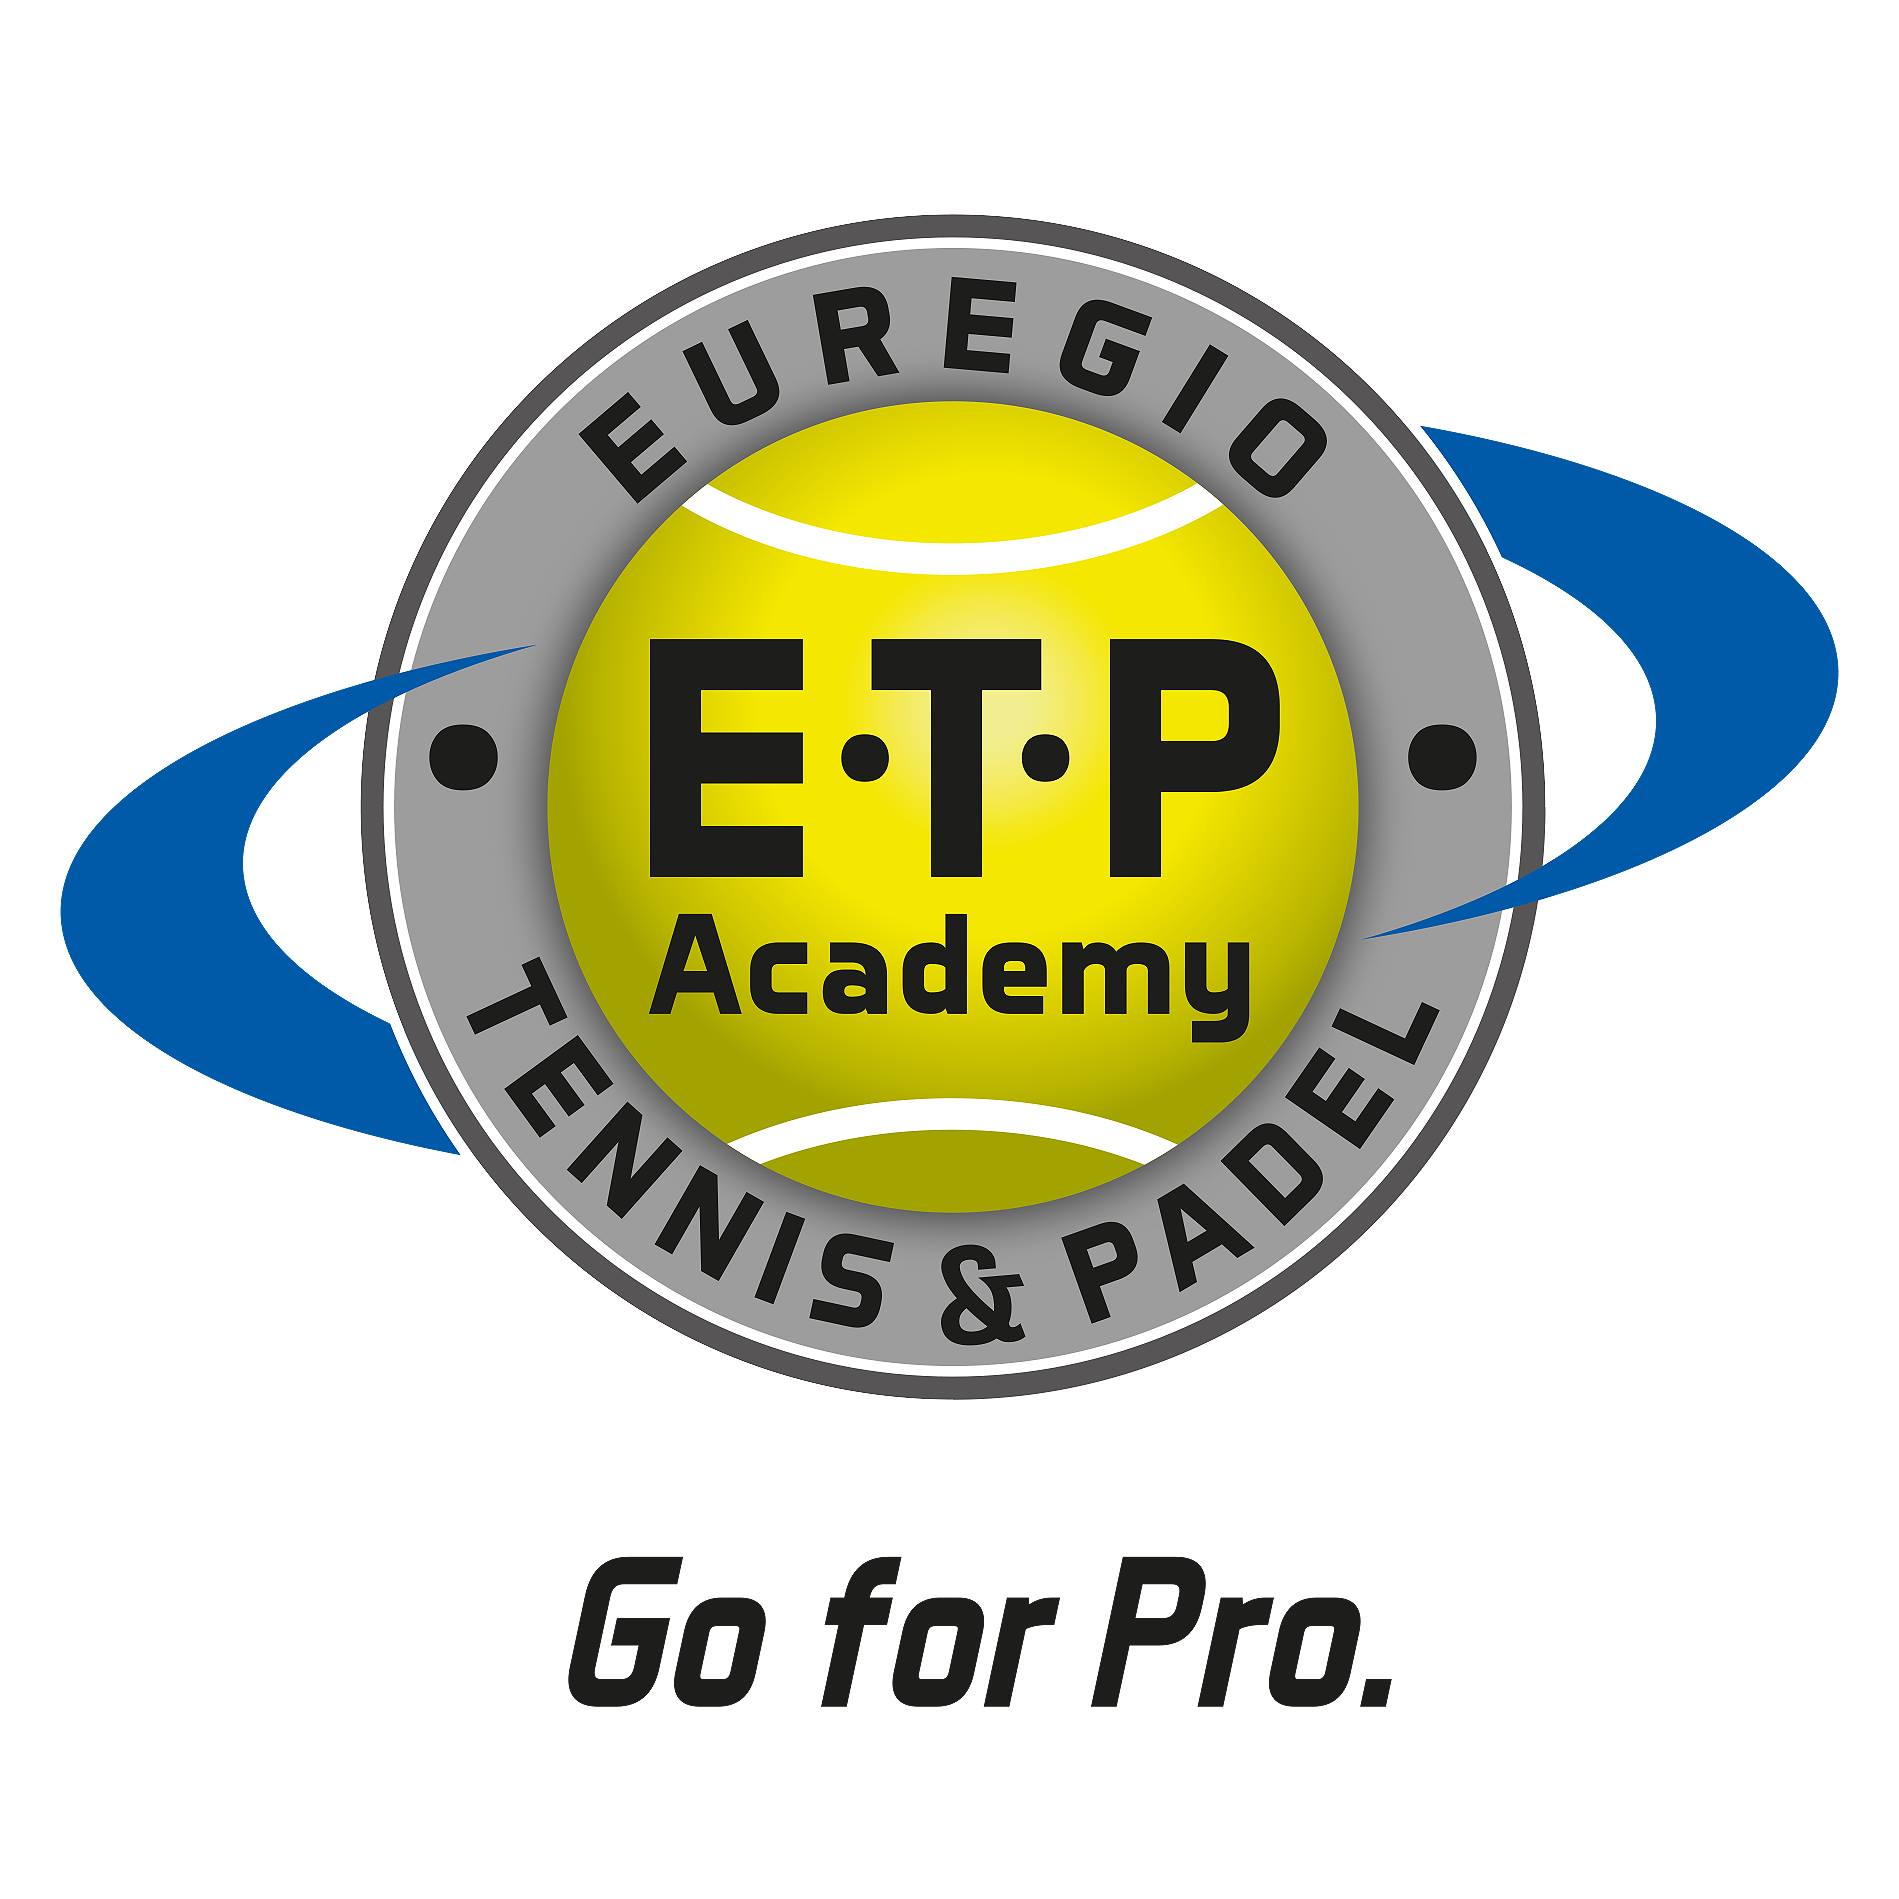 Profile image of venue Euregio Tennis & Padel Academy